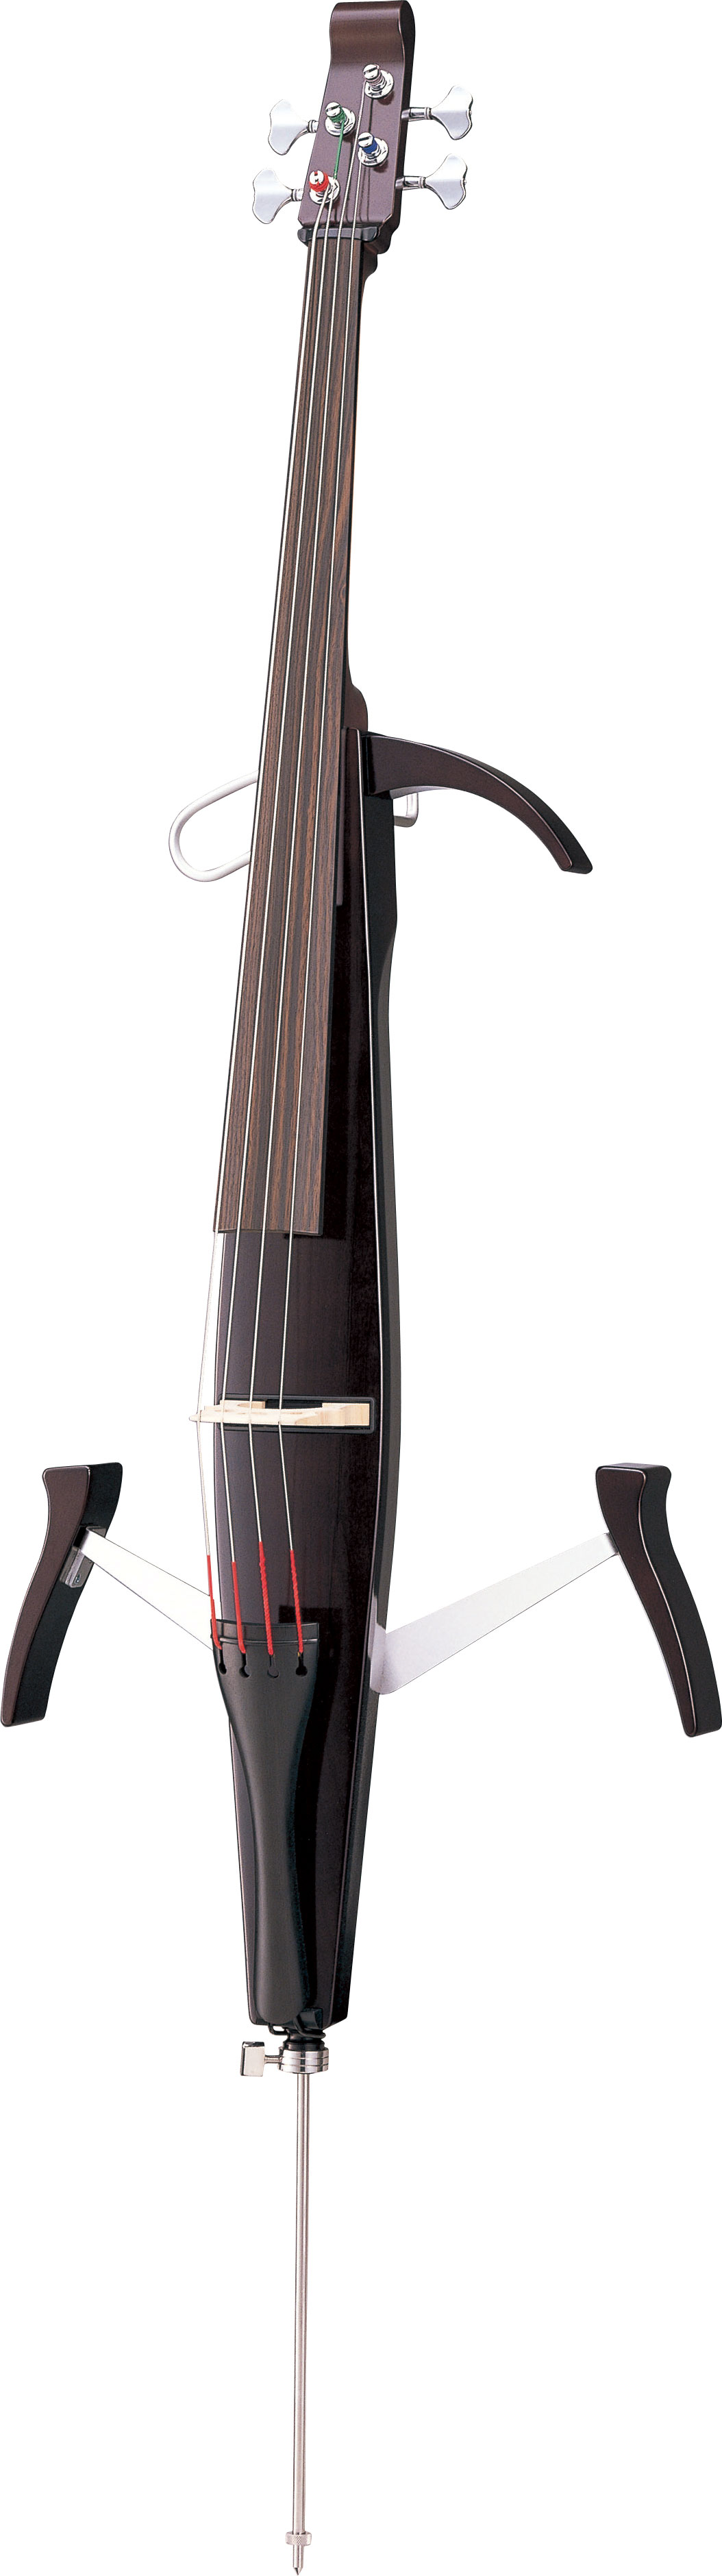 Silent Cello Modell SVC-50